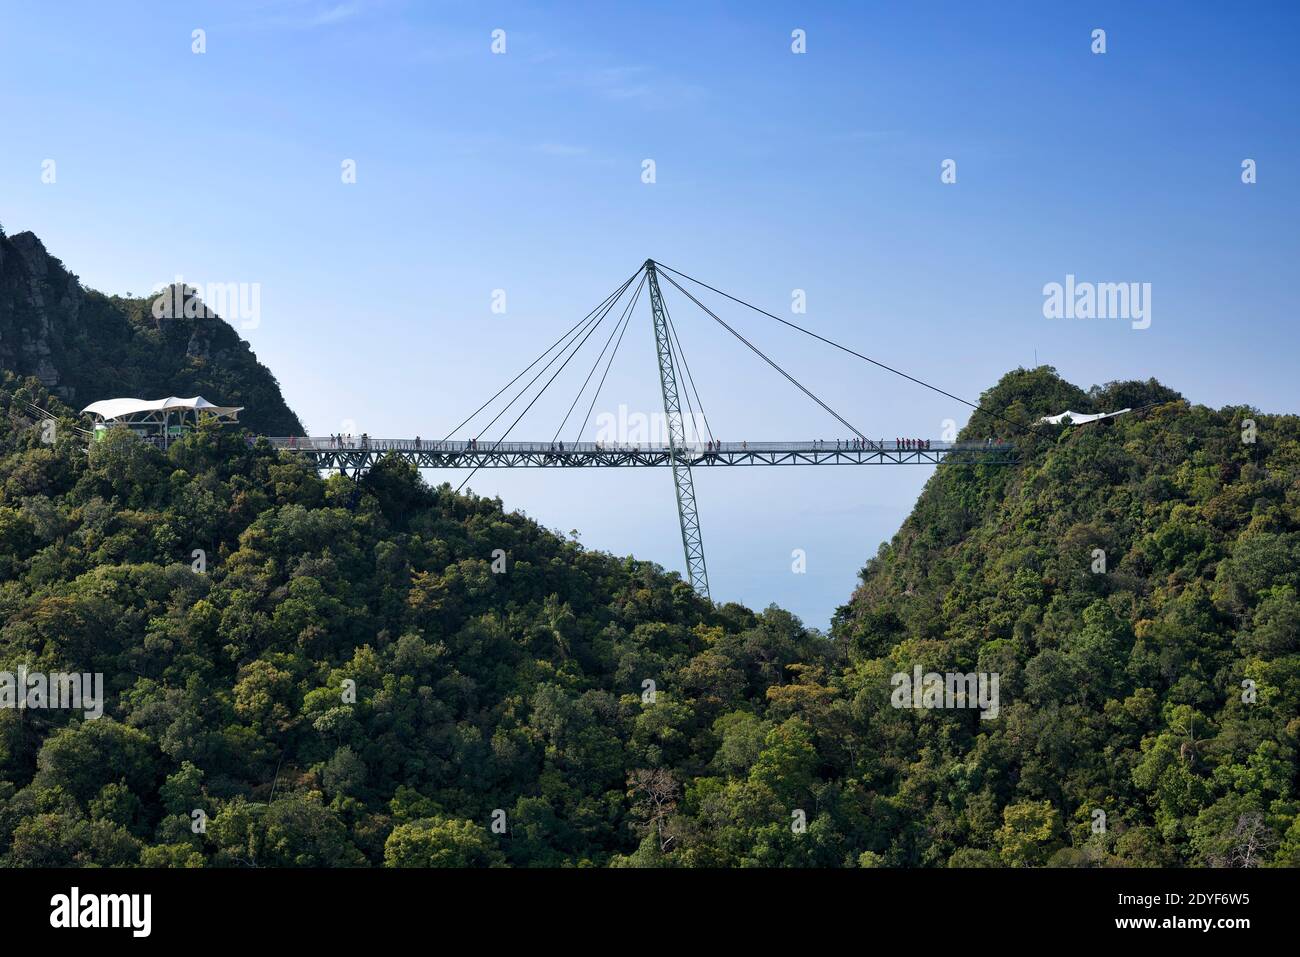 Langkawi Island, Malaysia - Dec 23, 2018: Aerial view of of Langkawi Sky Bridge and visitors seen exploring the bridge and viewpoint, Langkawi Island, Stock Photo